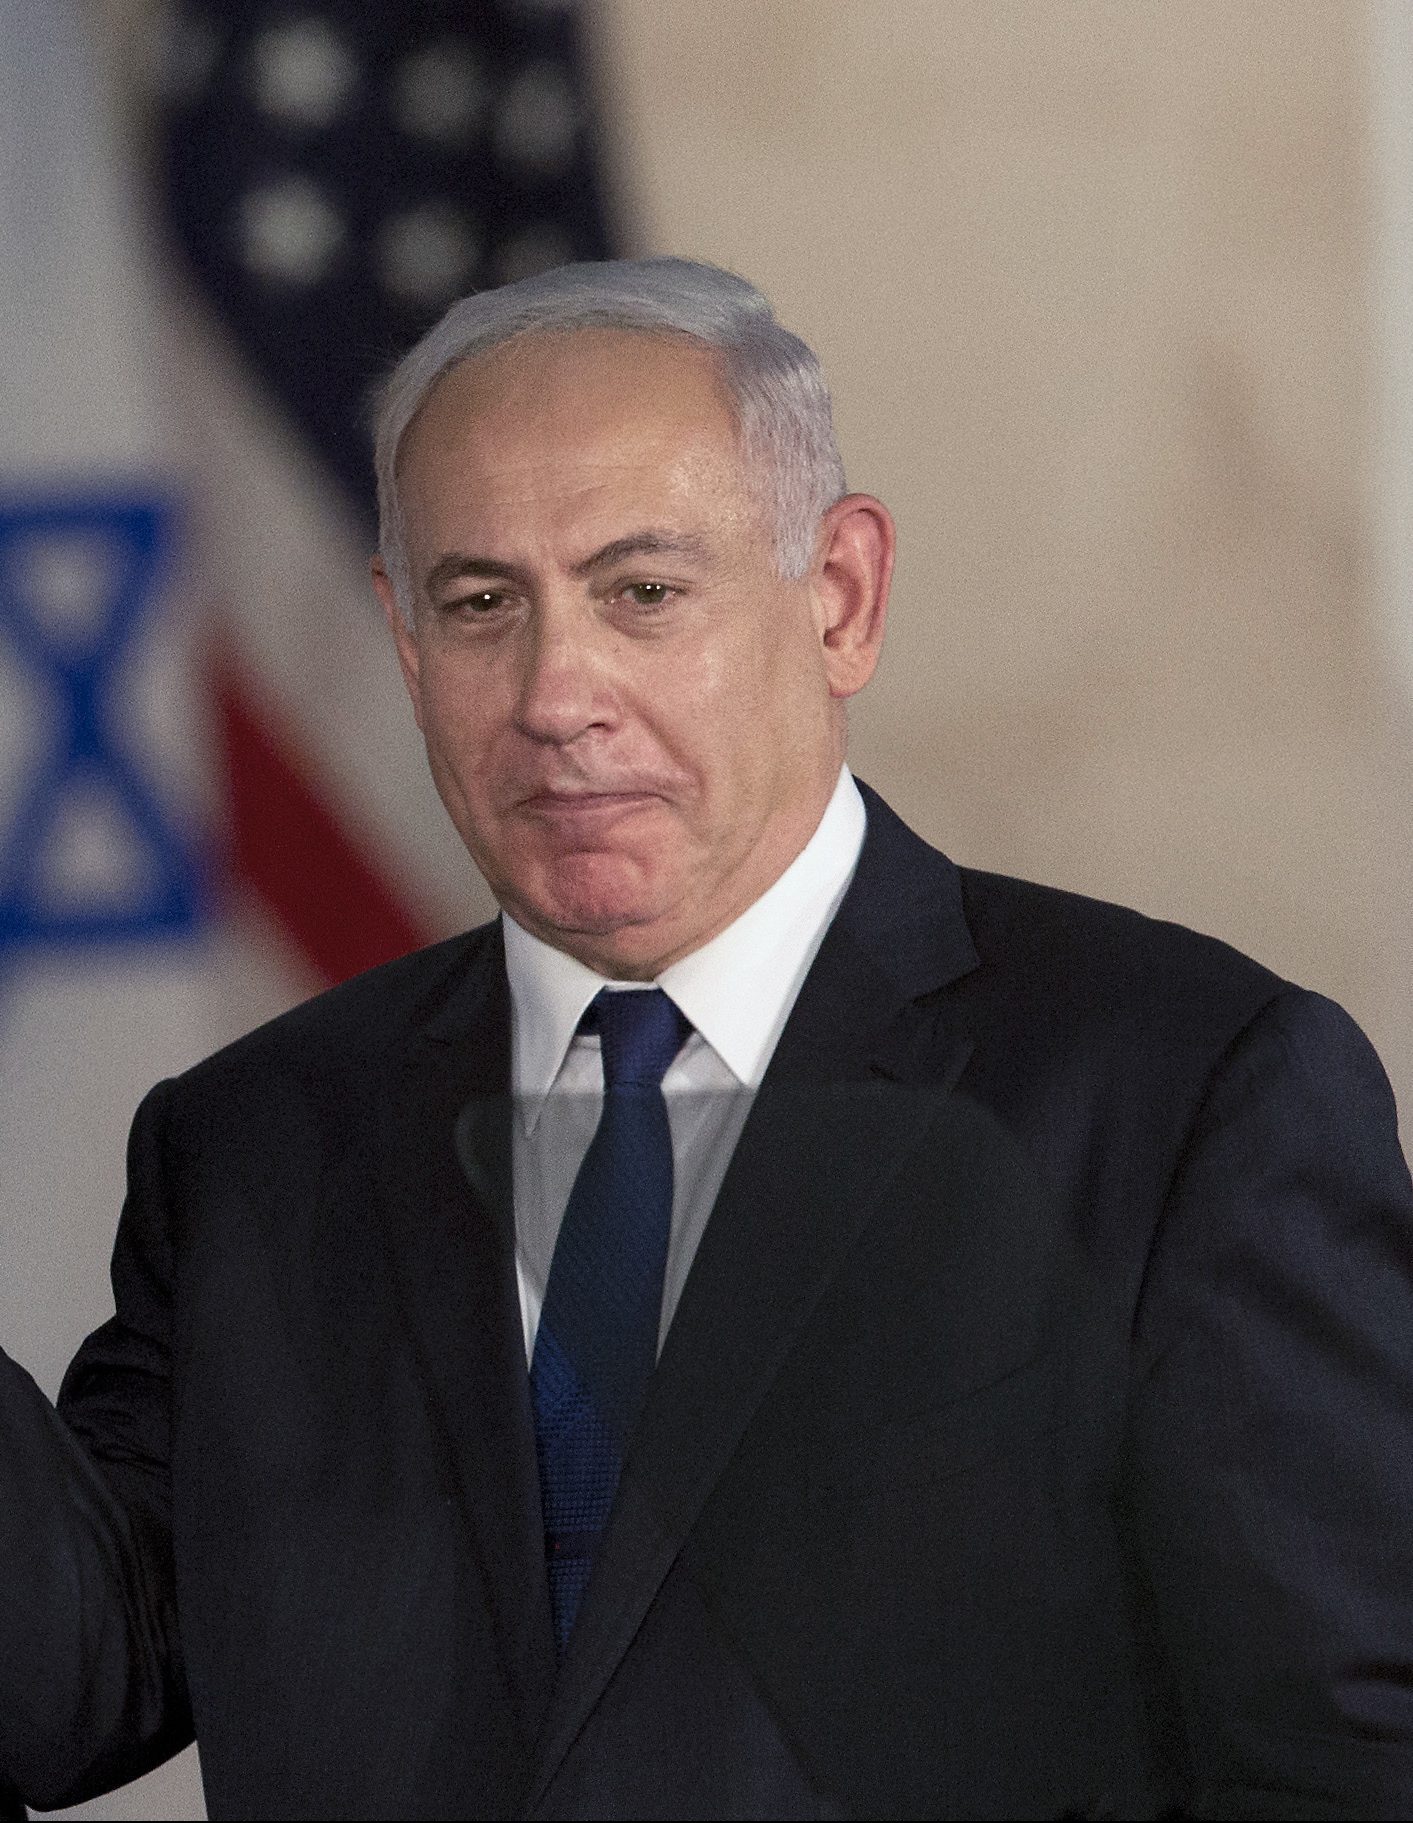 Netanyahu, promisiuni electorale radicale